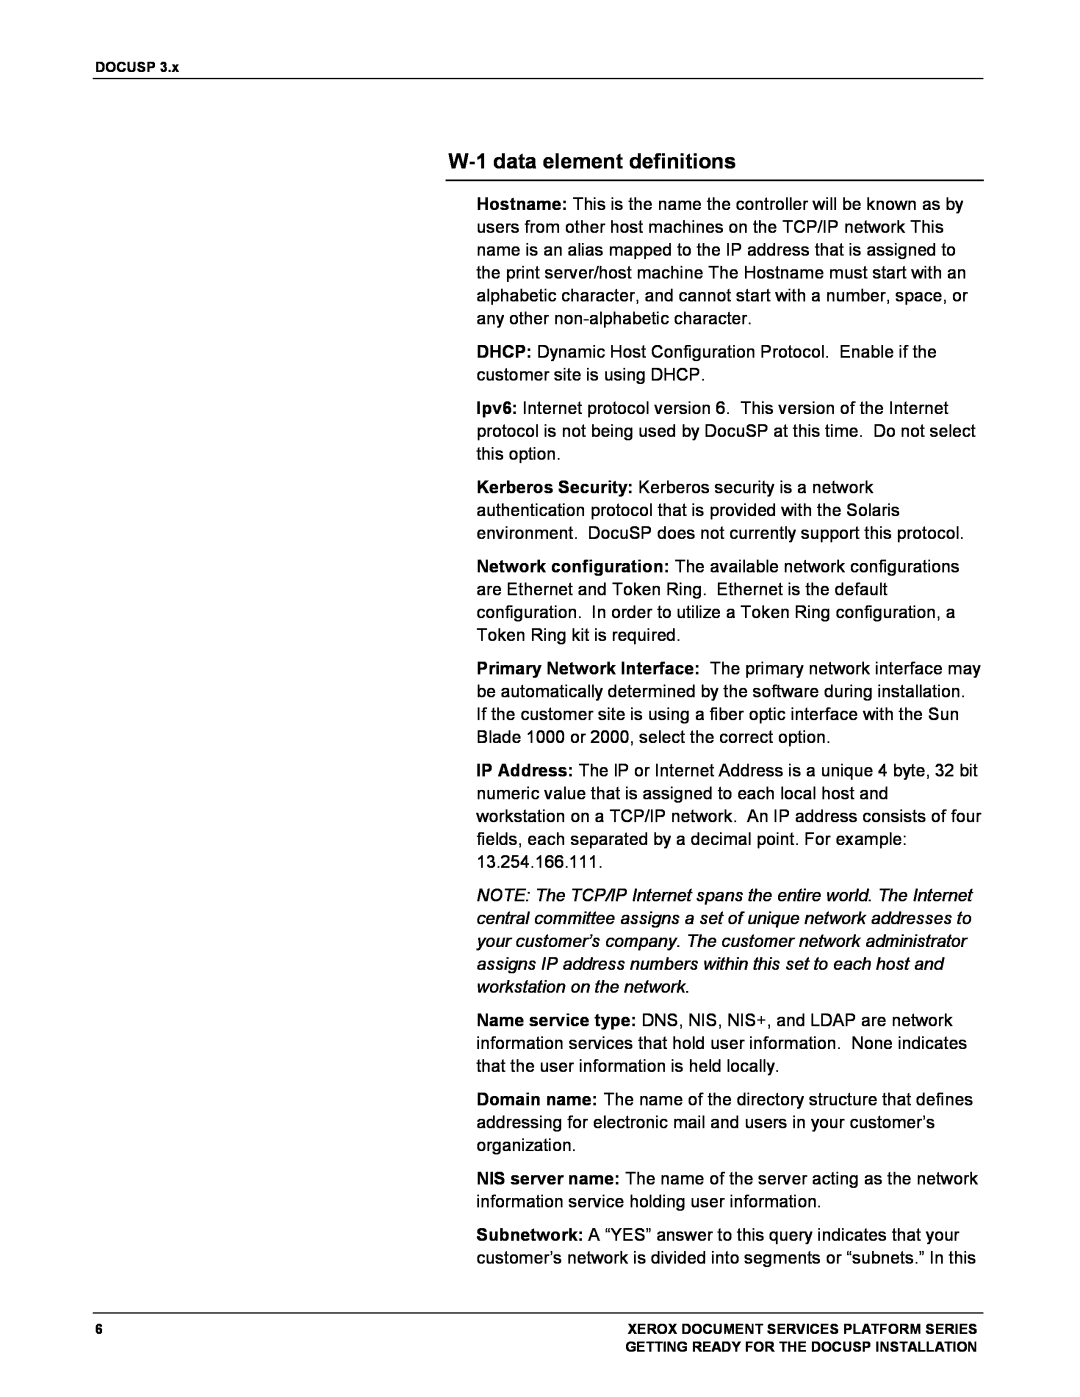 Xerox 701P38969 manual W-1data element definitions, Docusp, Xerox Document Services Platform Series 